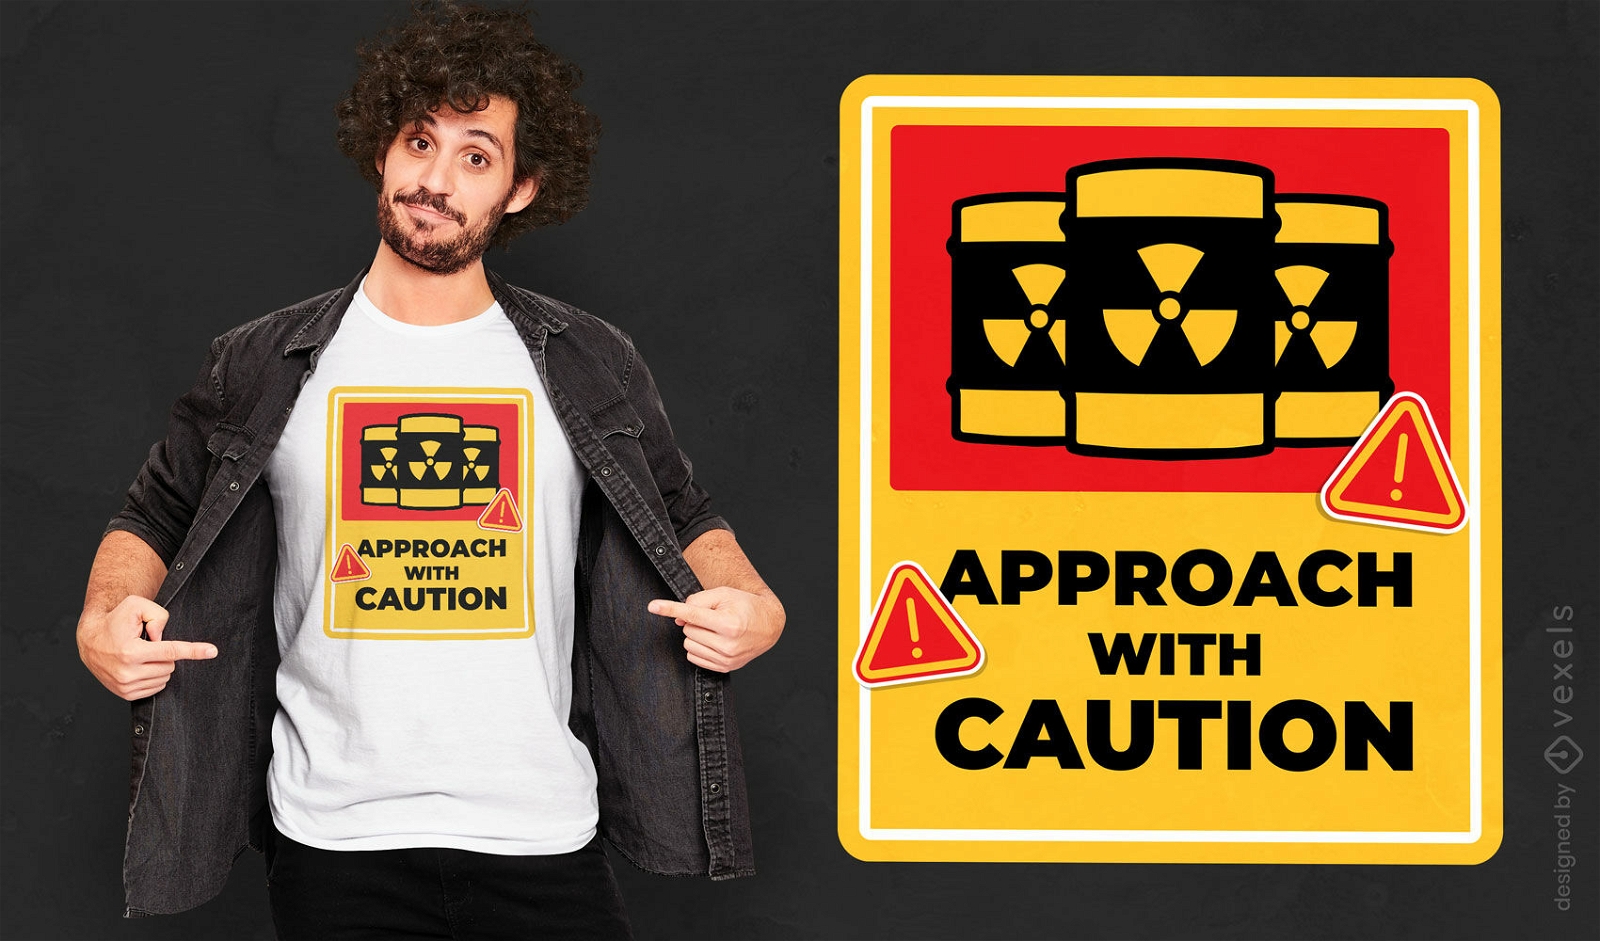 Dise?o de camiseta de precauci?n radiactiva.